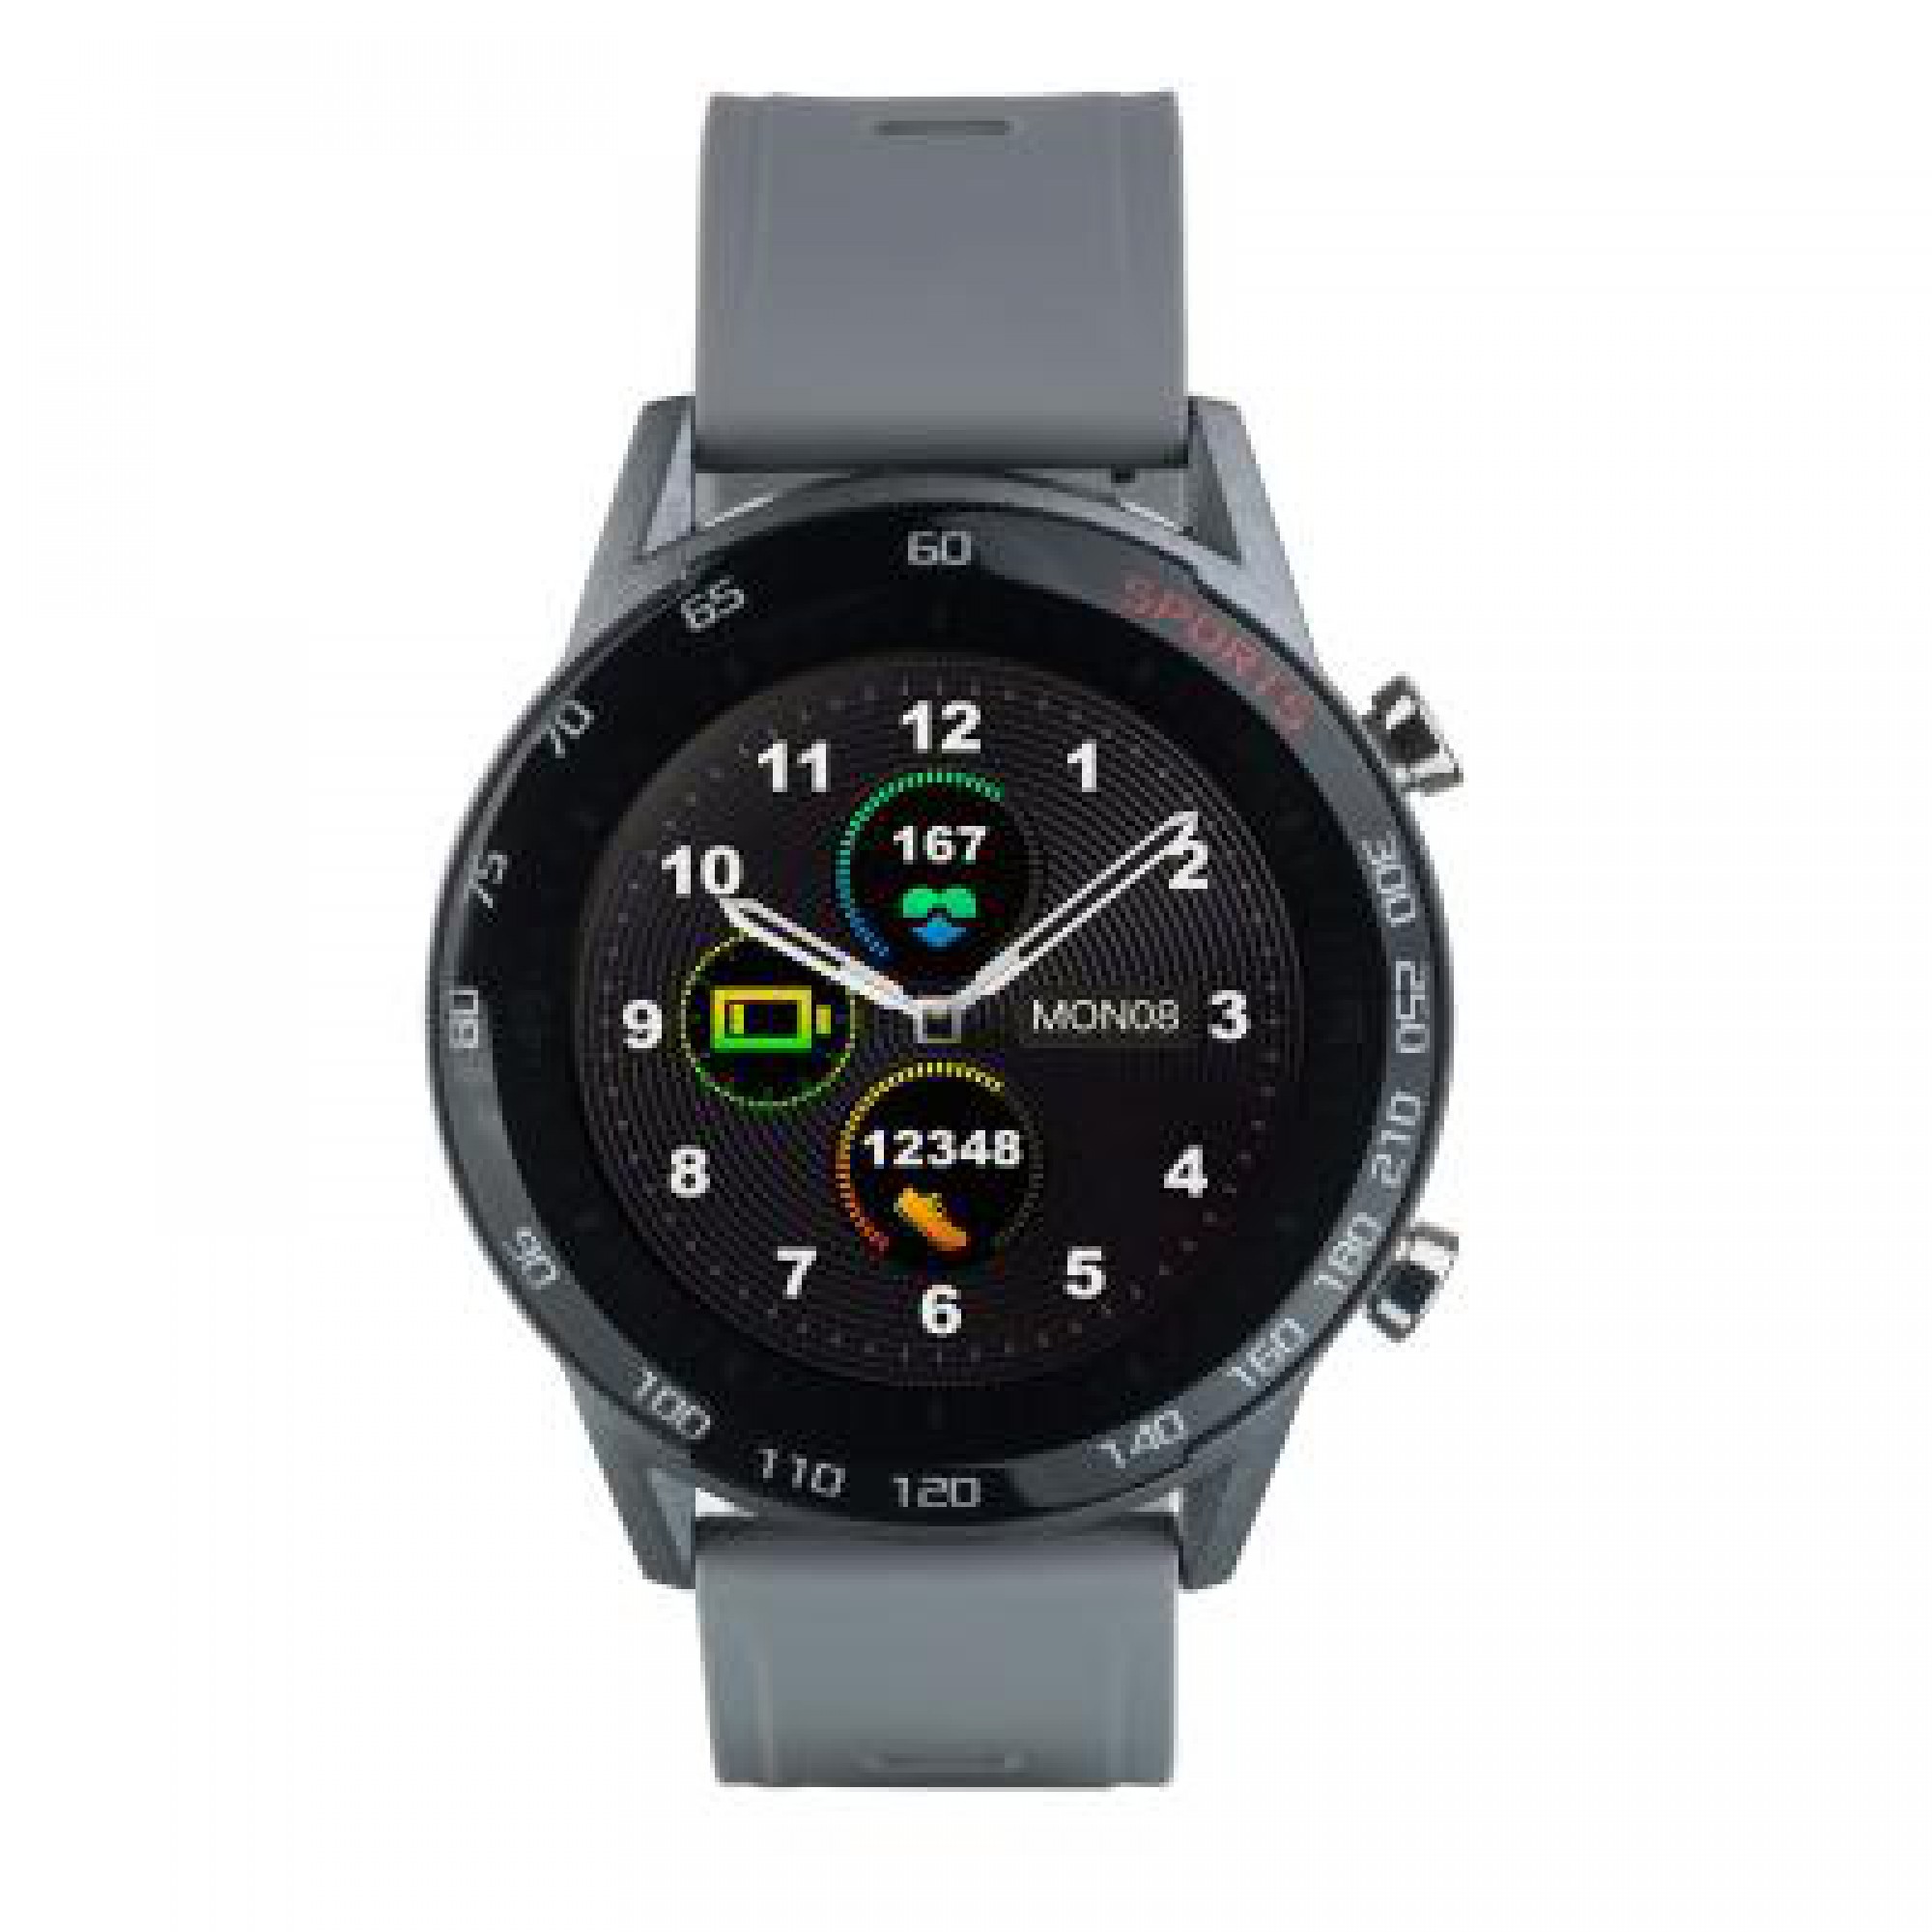 Смарт-годинник Globex Smart Watch Me2 (Gray)